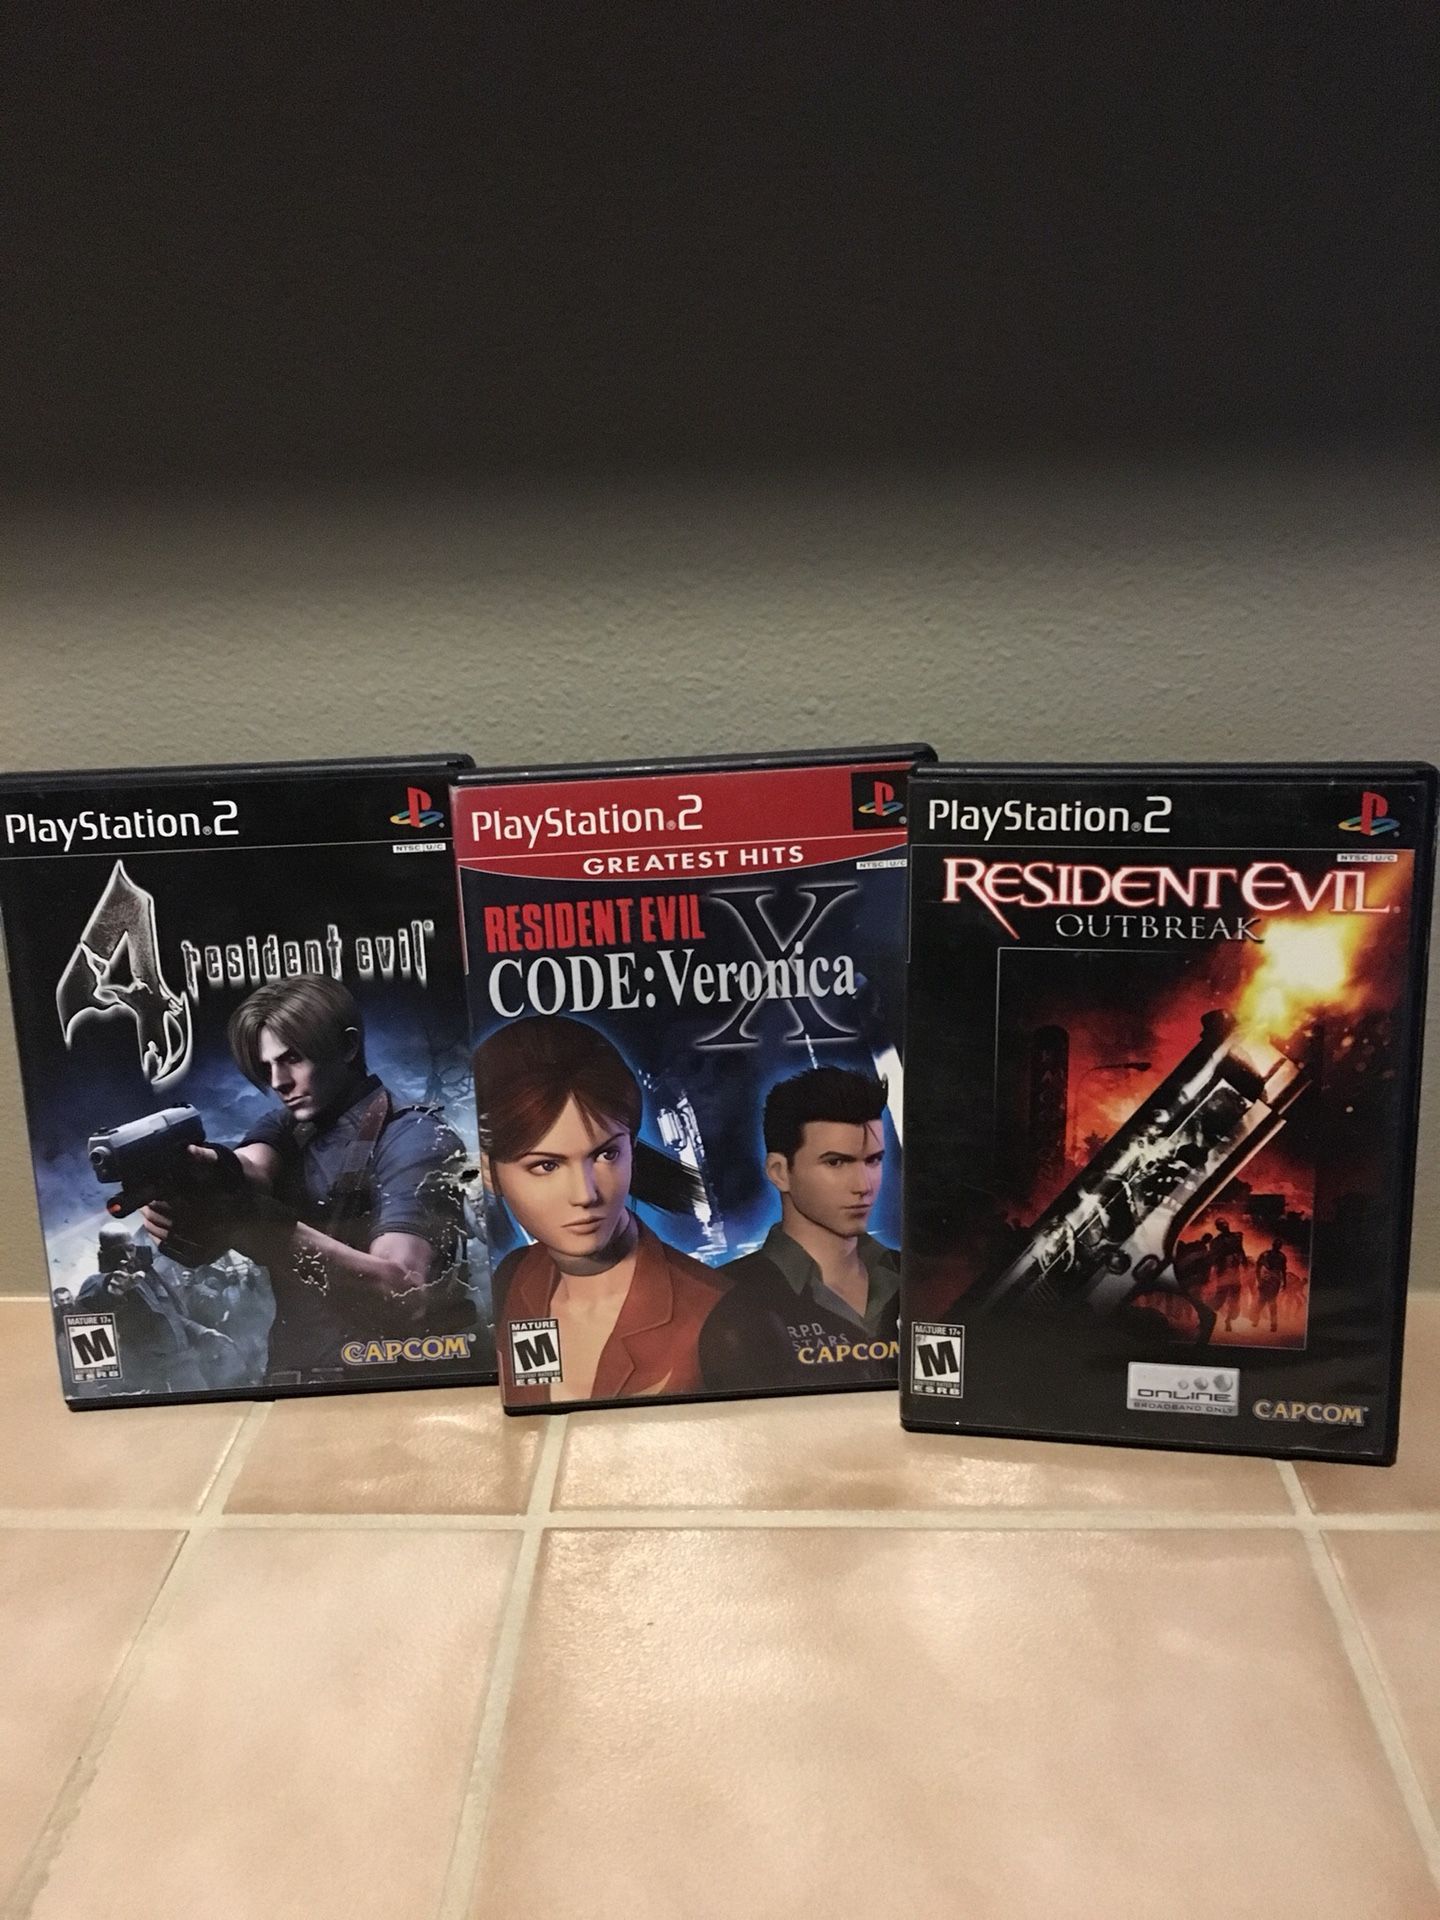 Resident evil games for PlayStation 2